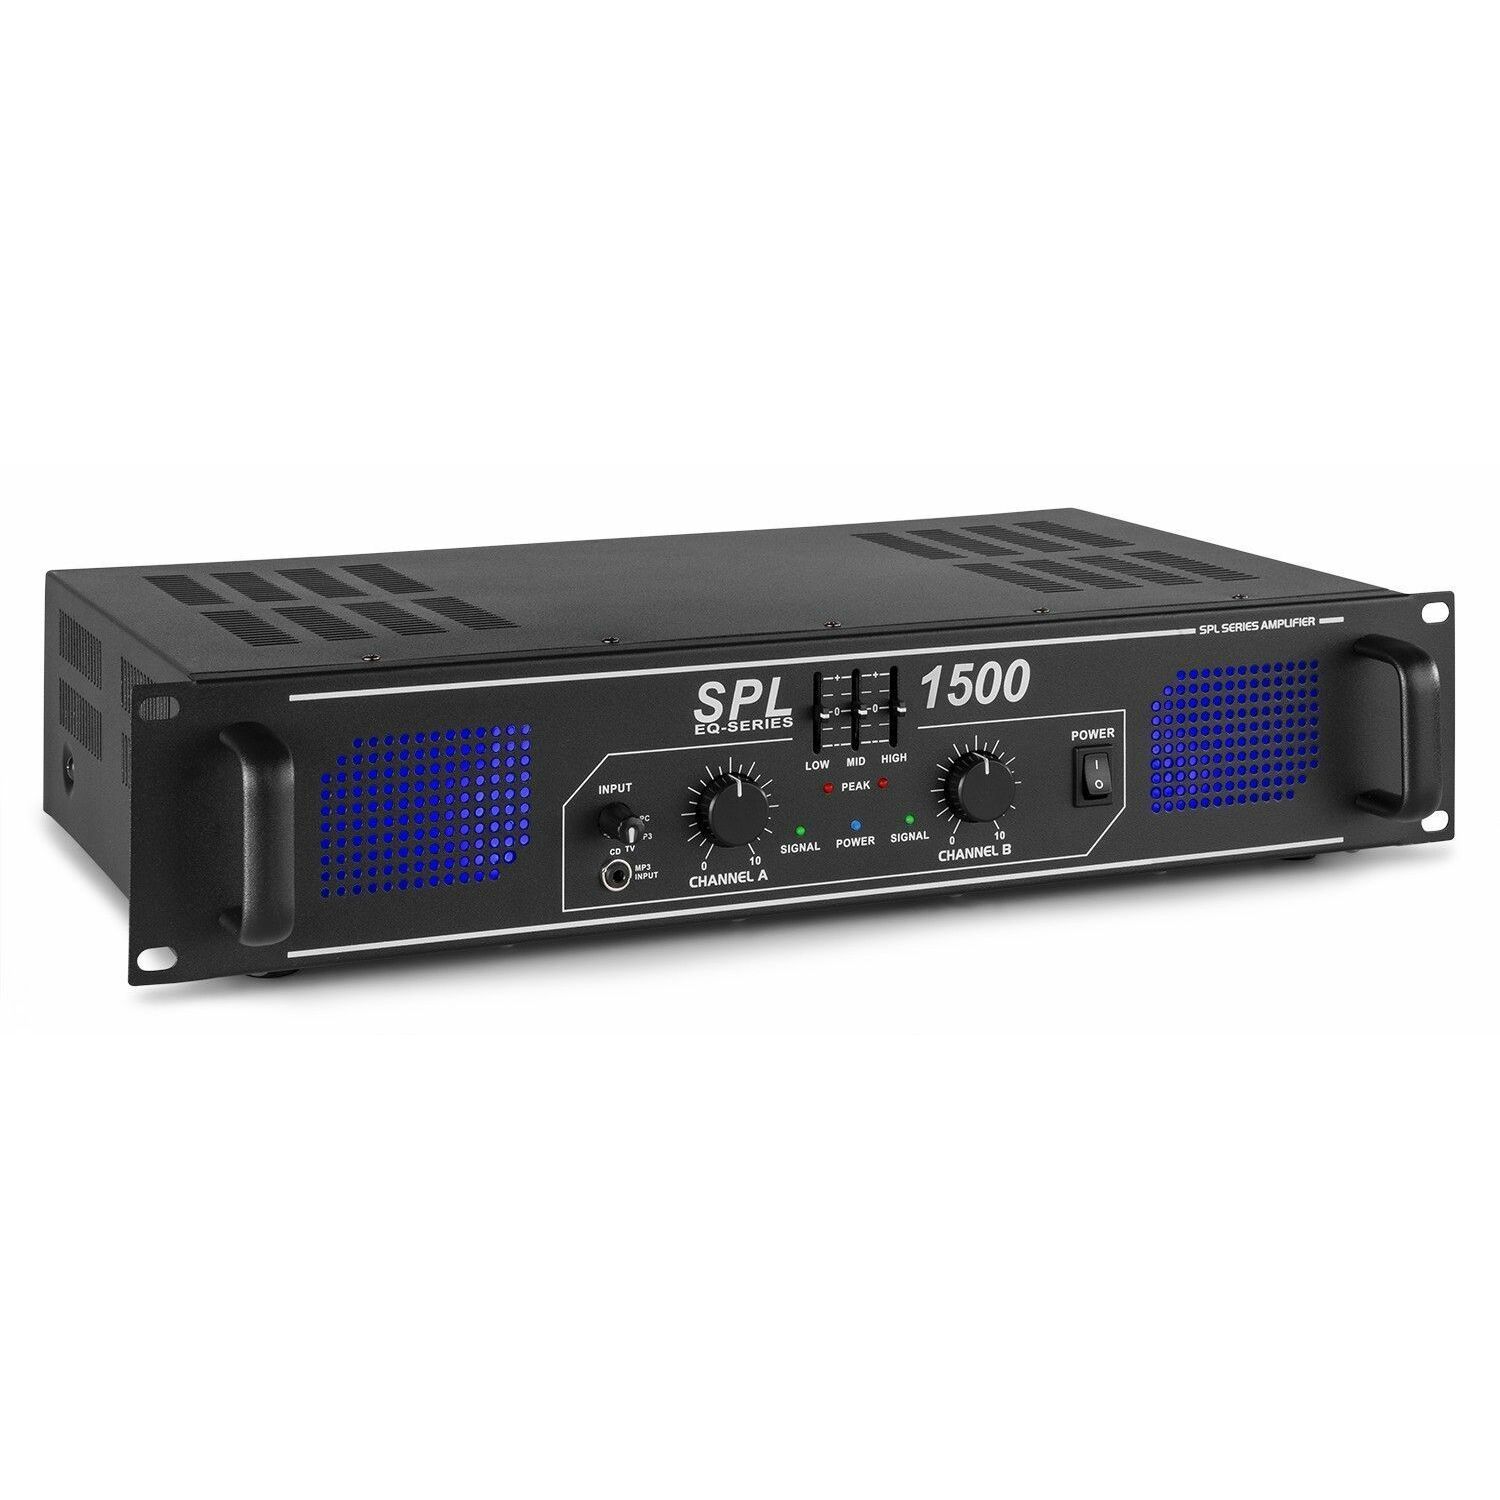 Retourdeal - SkyTec 2 x 750W DJ PA versterker SPL1500 met EQ